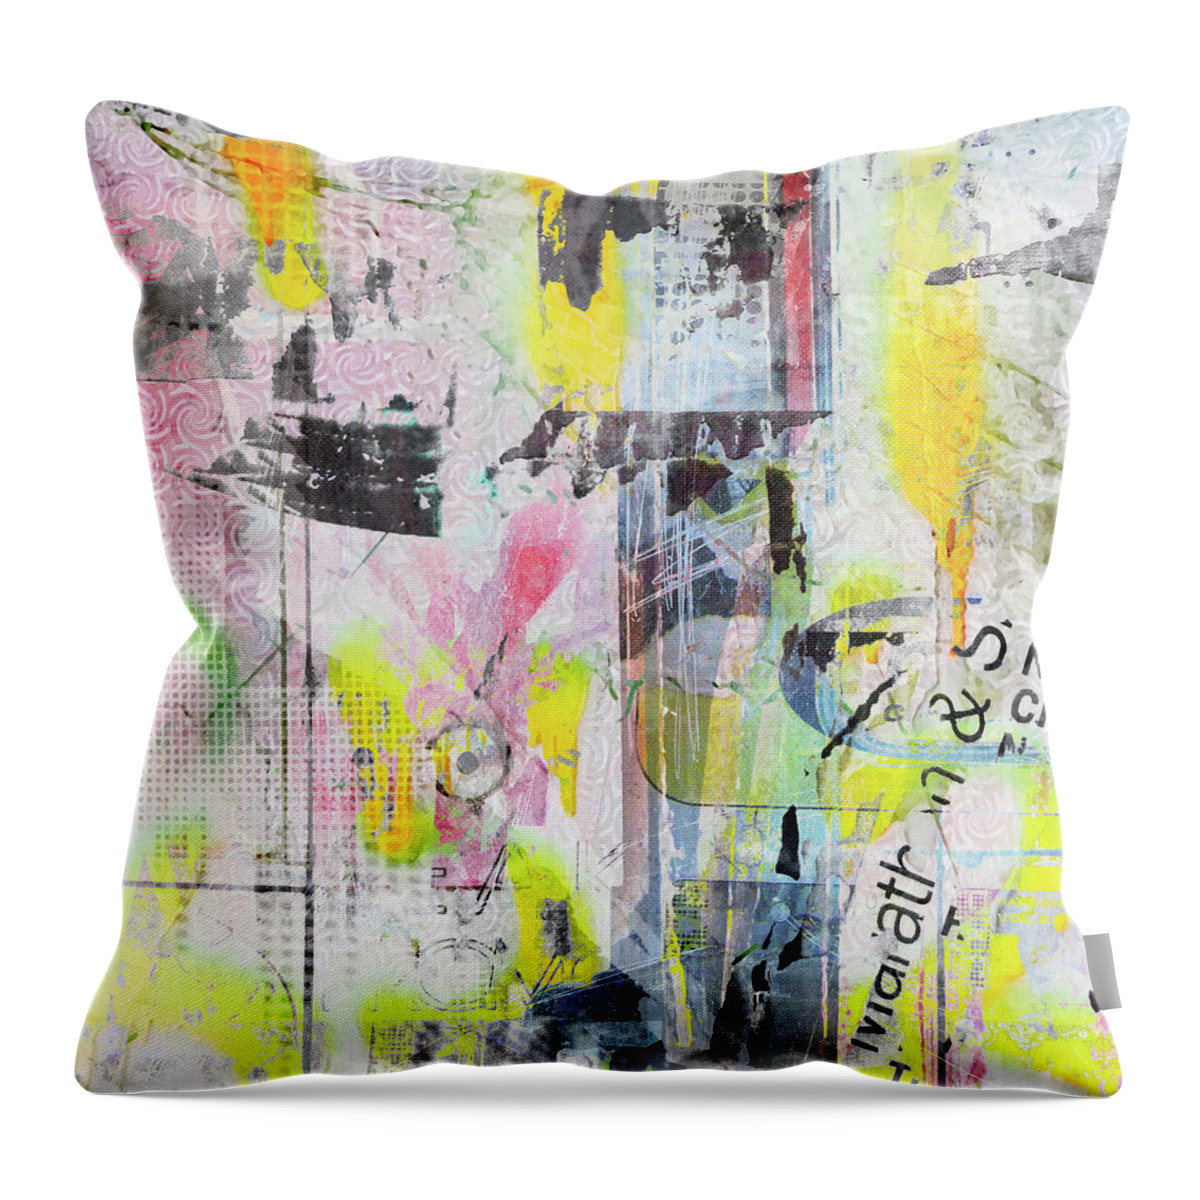 Urban Throw Pillow featuring the digital art Graffiti Graphic by Roseanne Jones